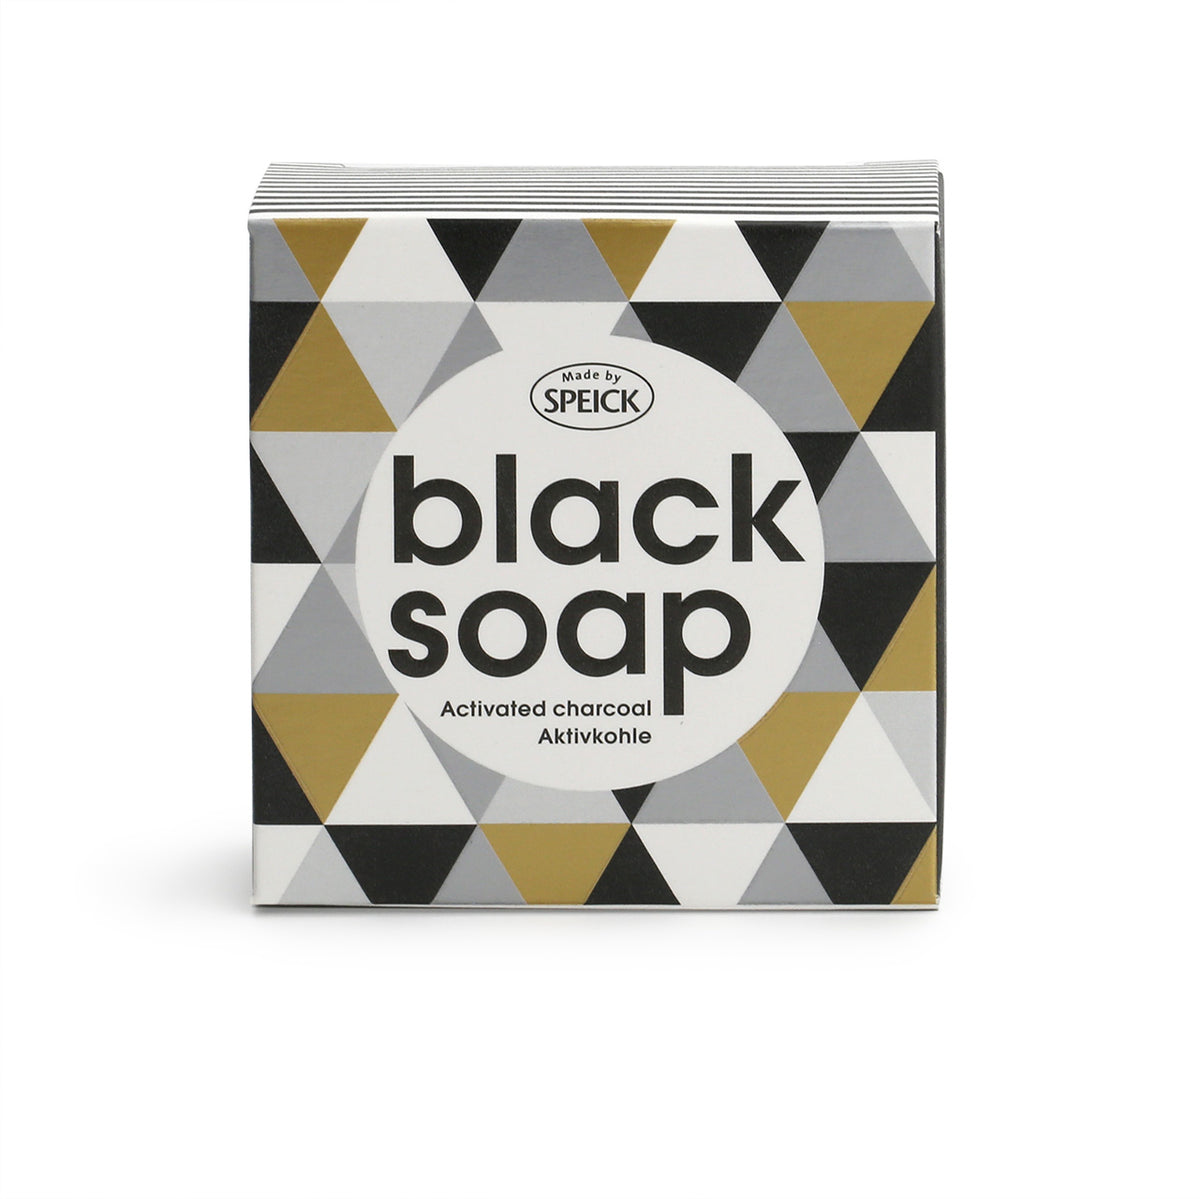 Speick black soap box